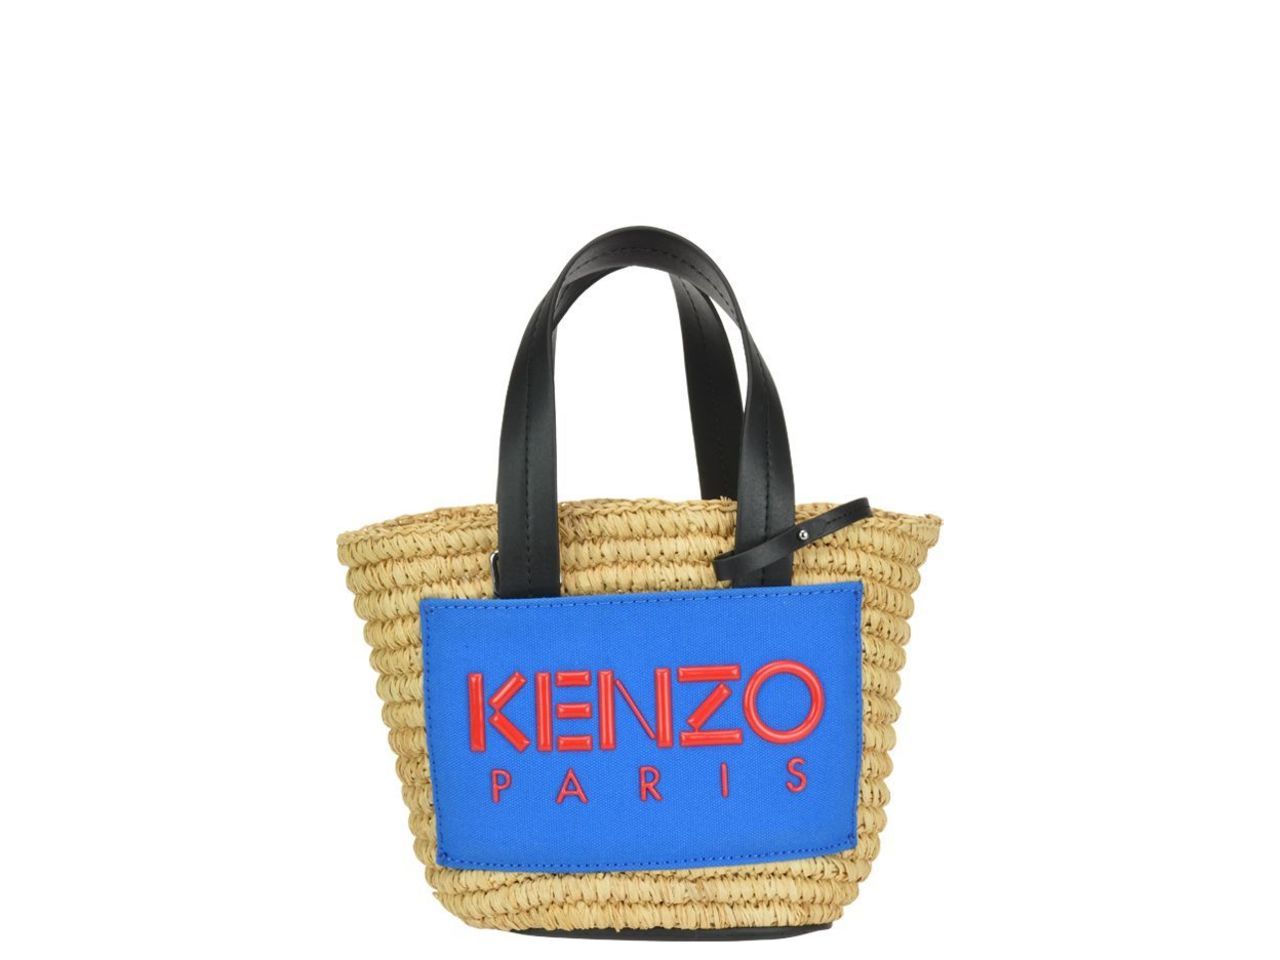 Kenzo Kenzo Paris Shopping Bag